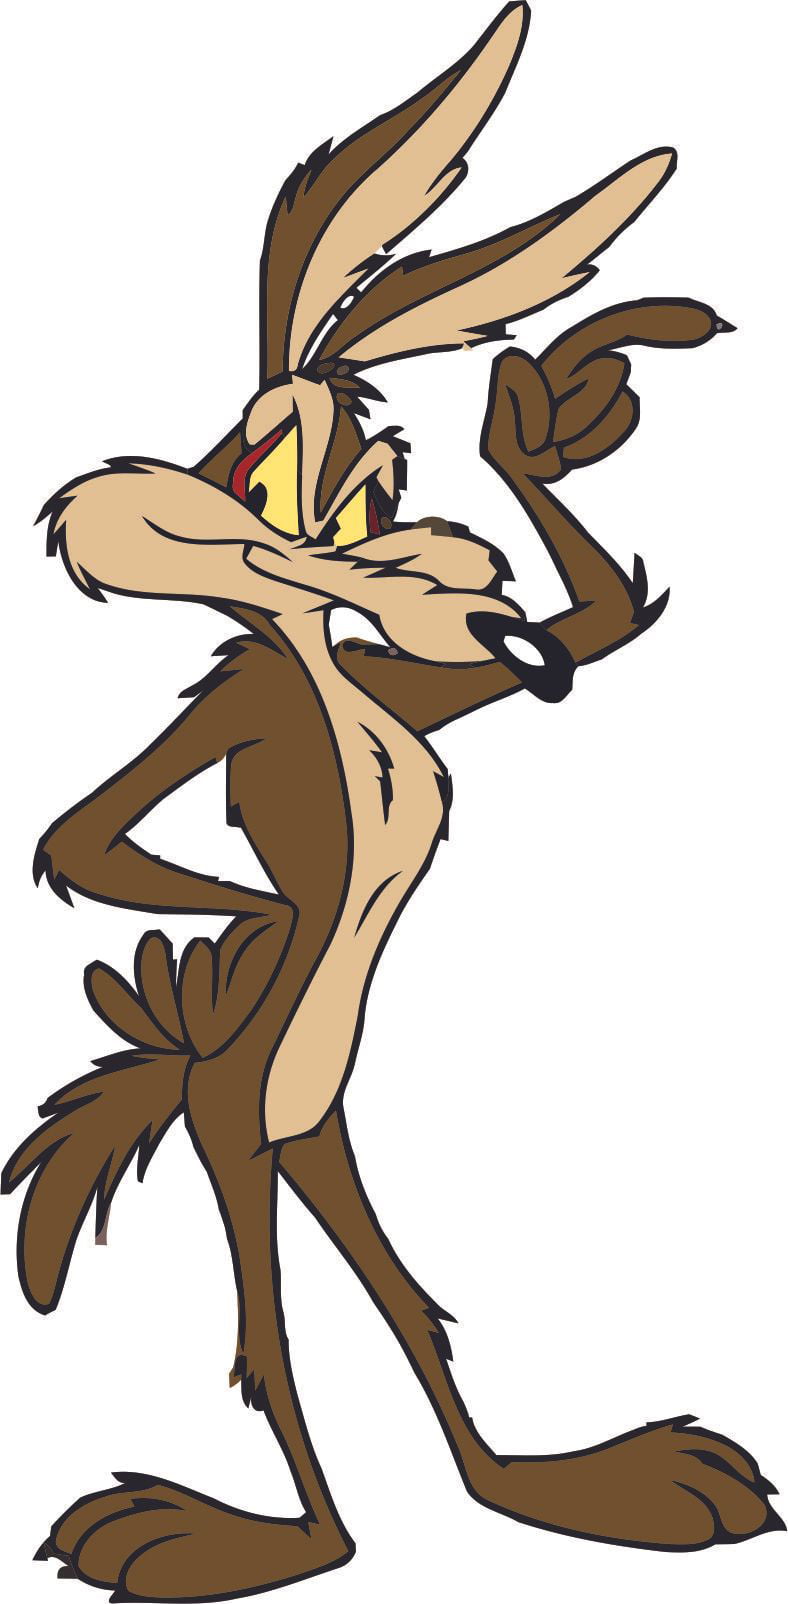 Coyote Cartoon Character